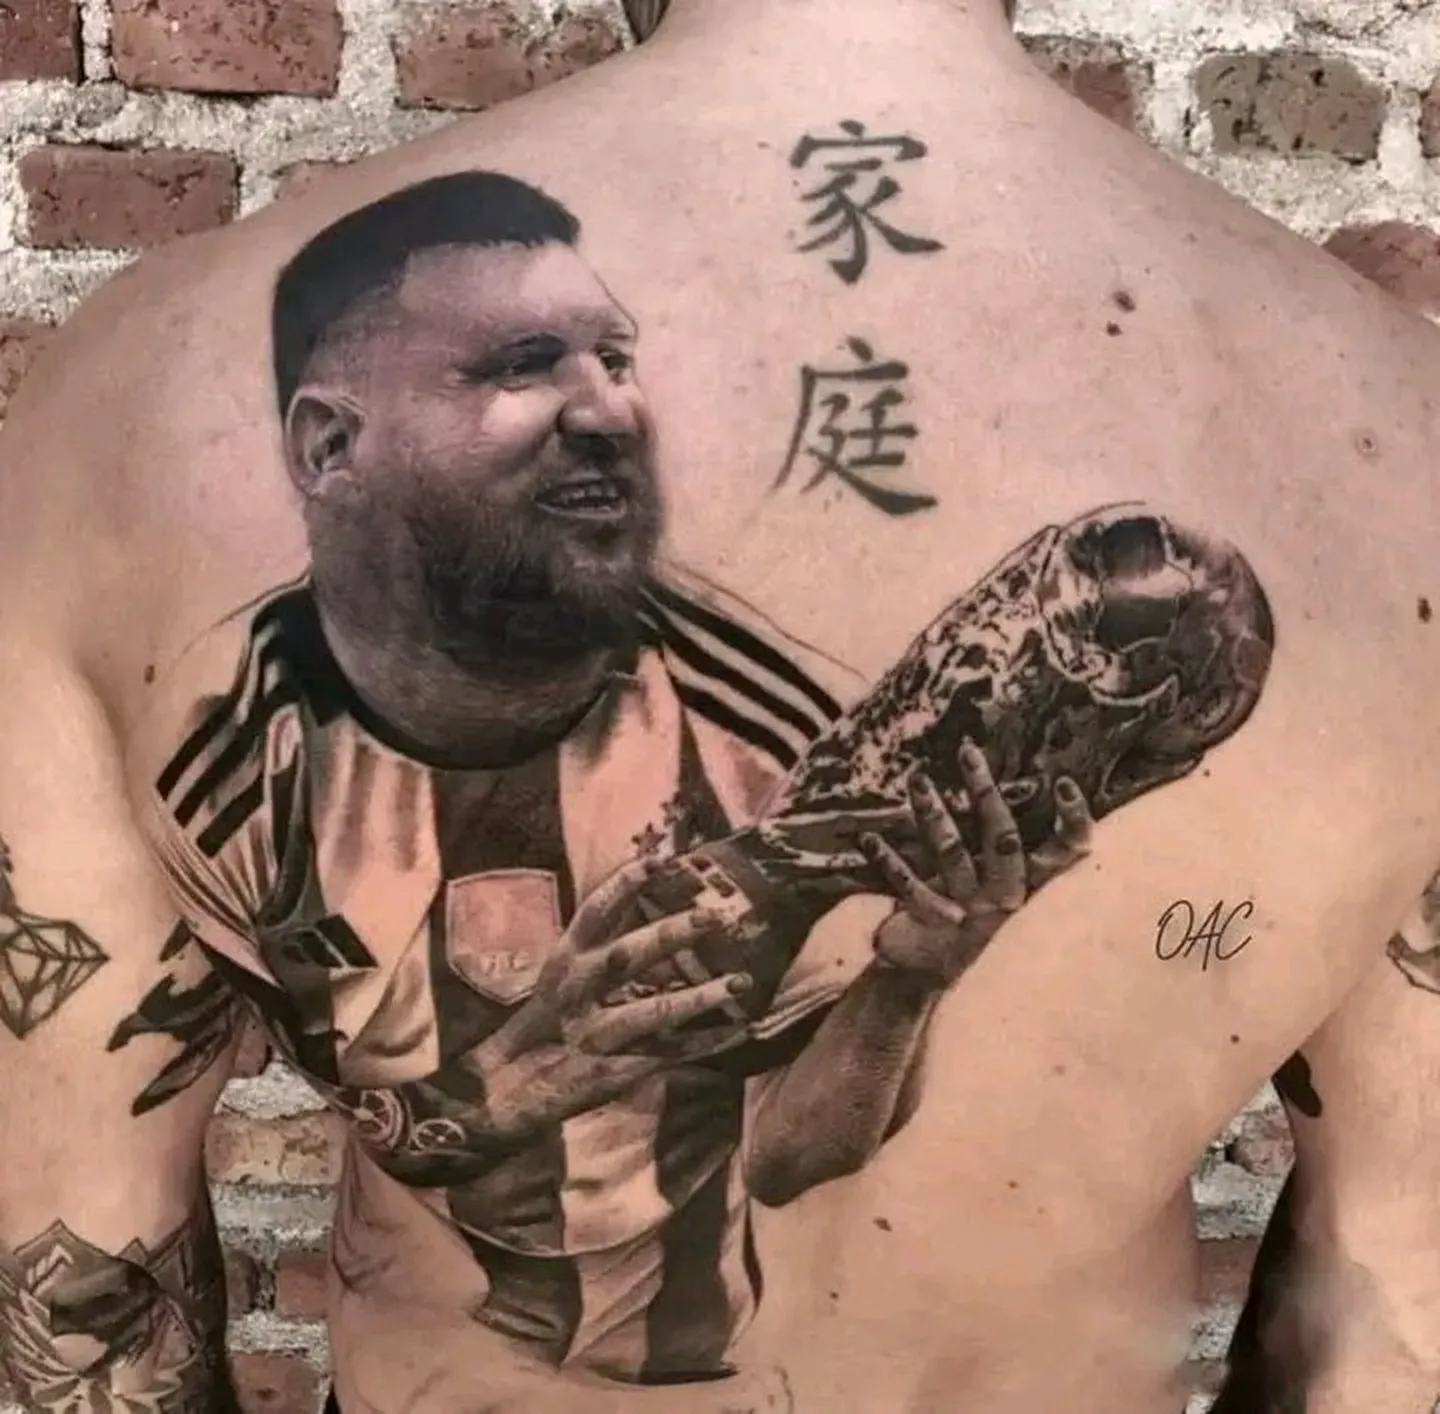 El hilo de Twitter que muestra los peores tatuajes del mundial • Canal C